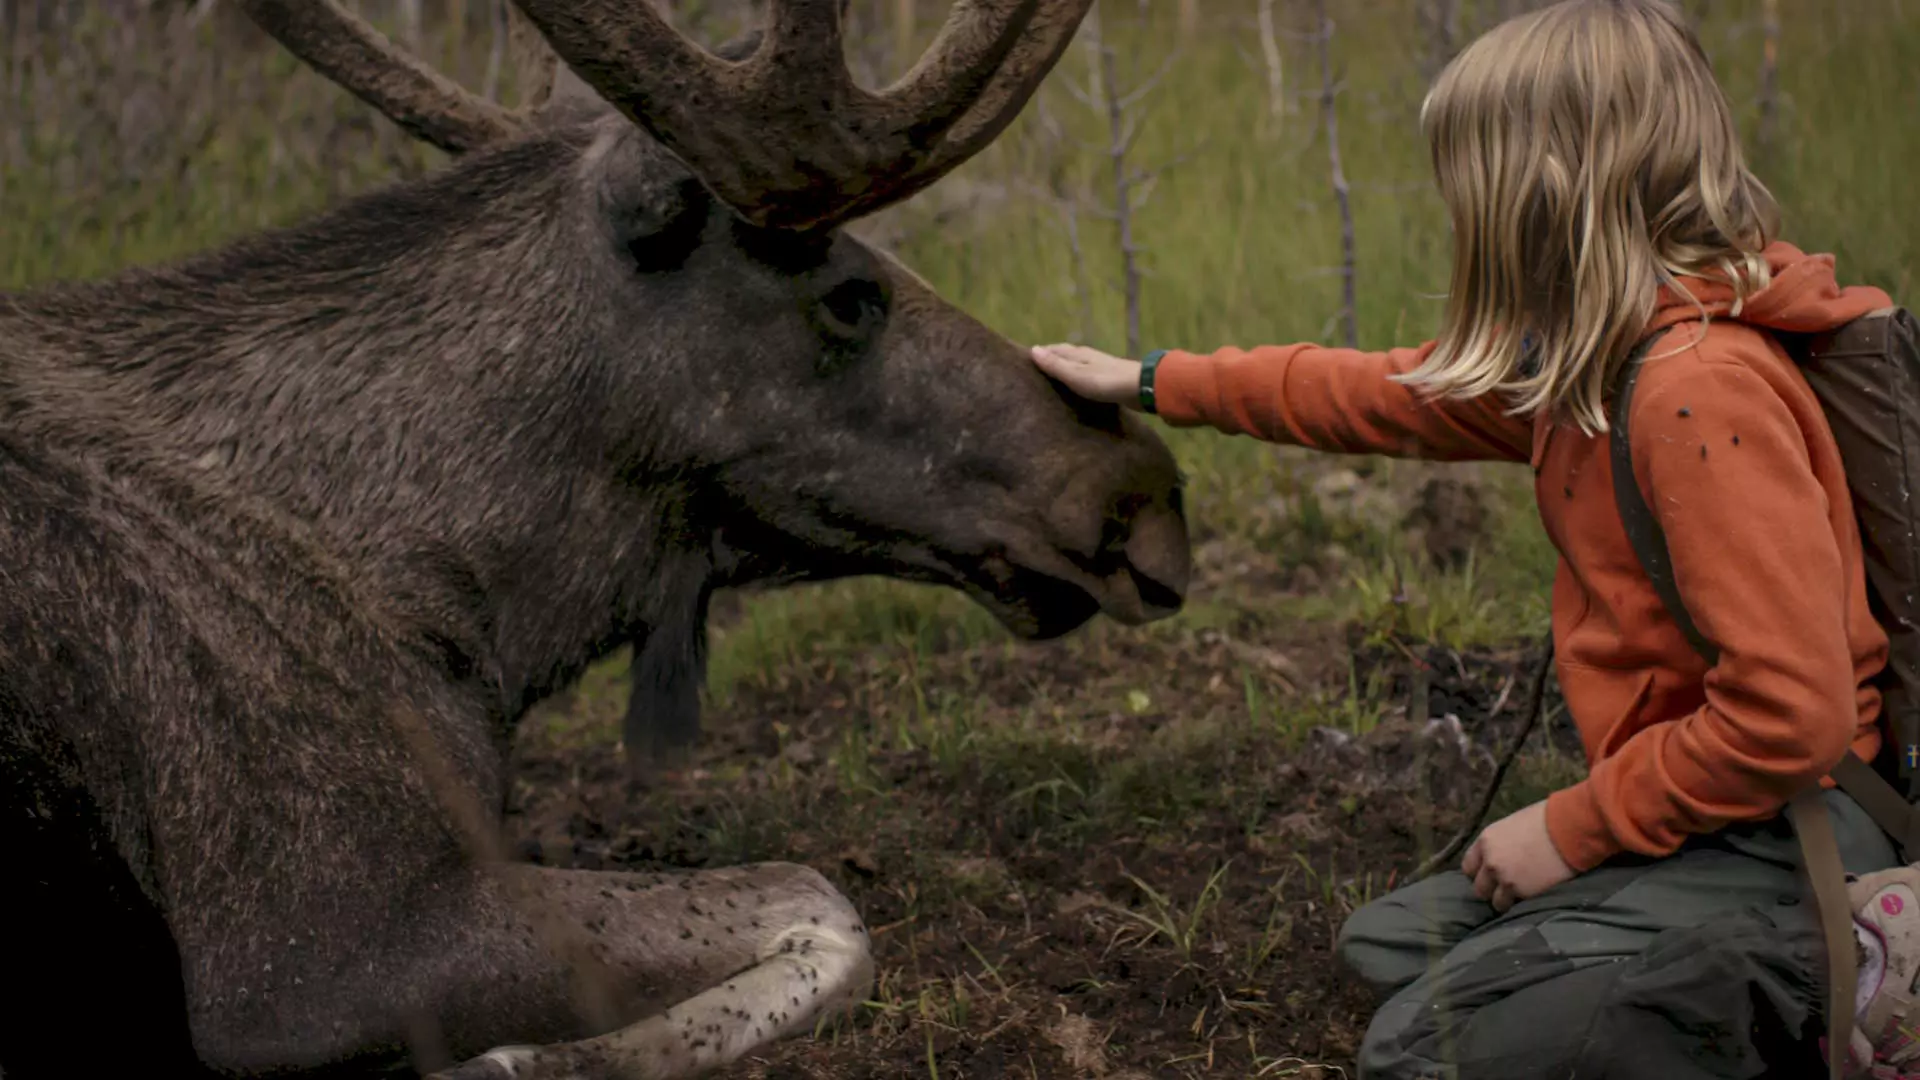 En jente på 8 år klapper en elg på mulen. Elgen ligger på bakken og jenta sitter på kne forran elgen.